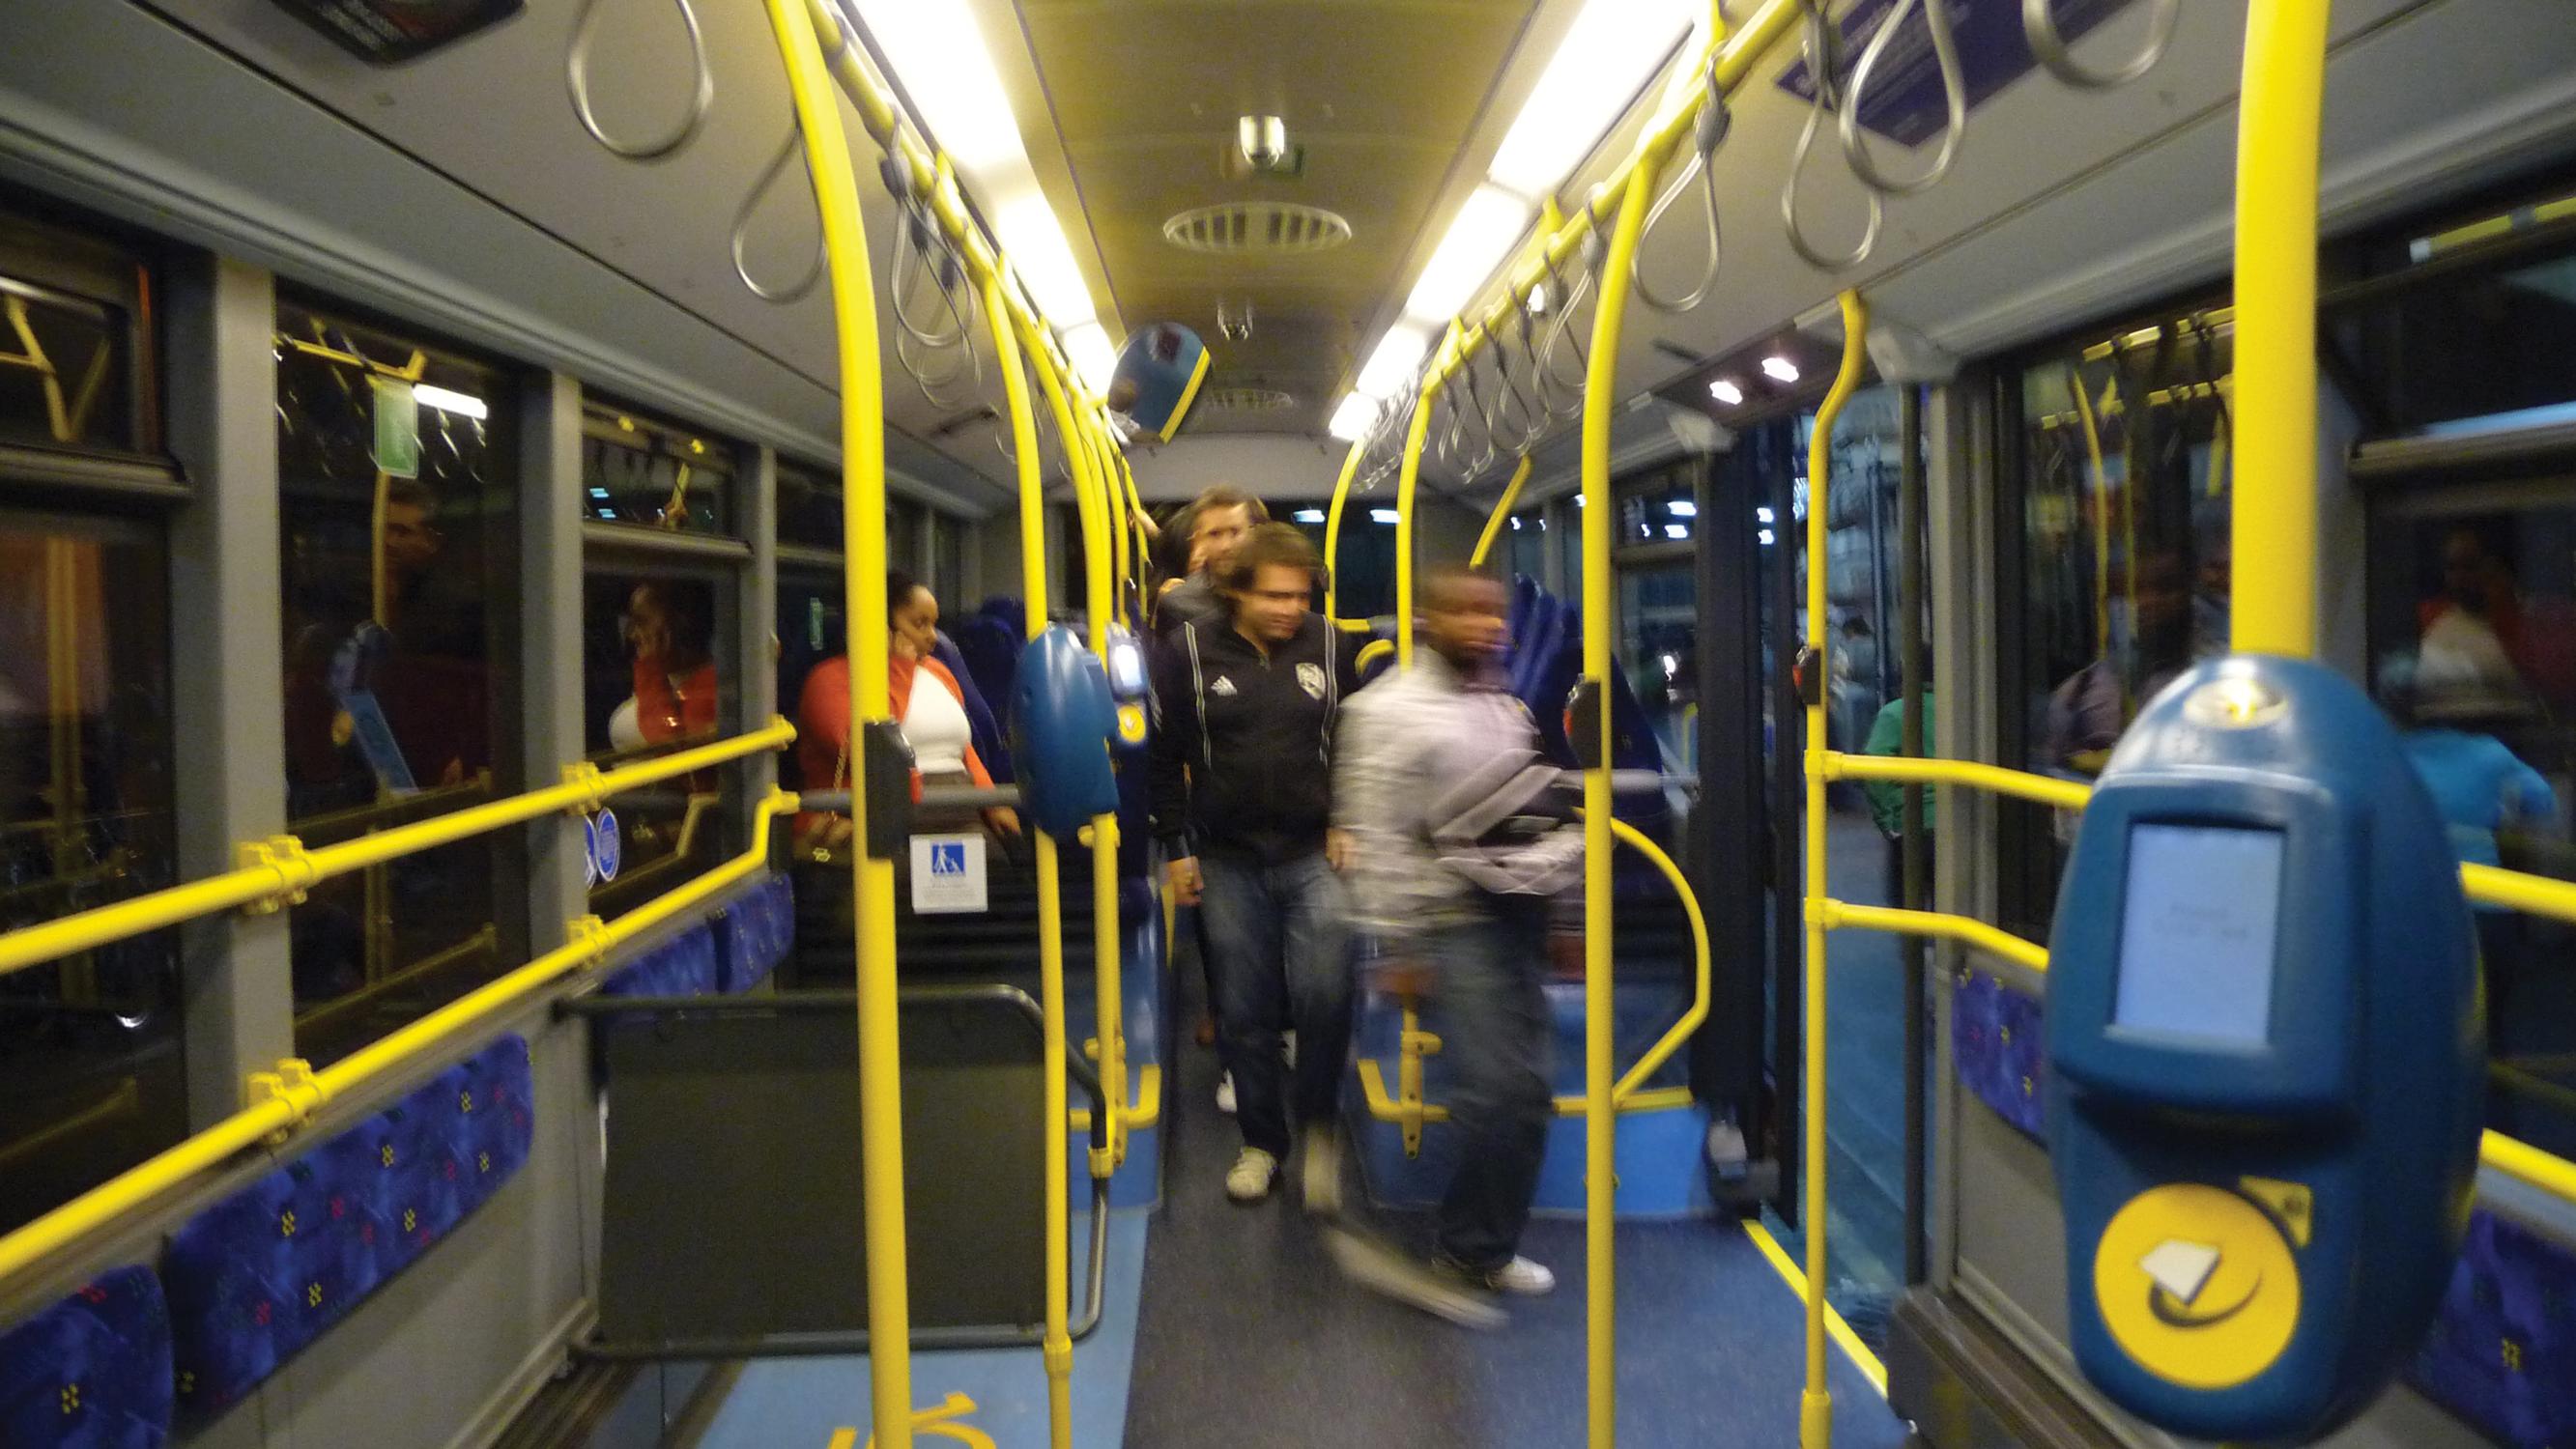 Bus interiors: new standards